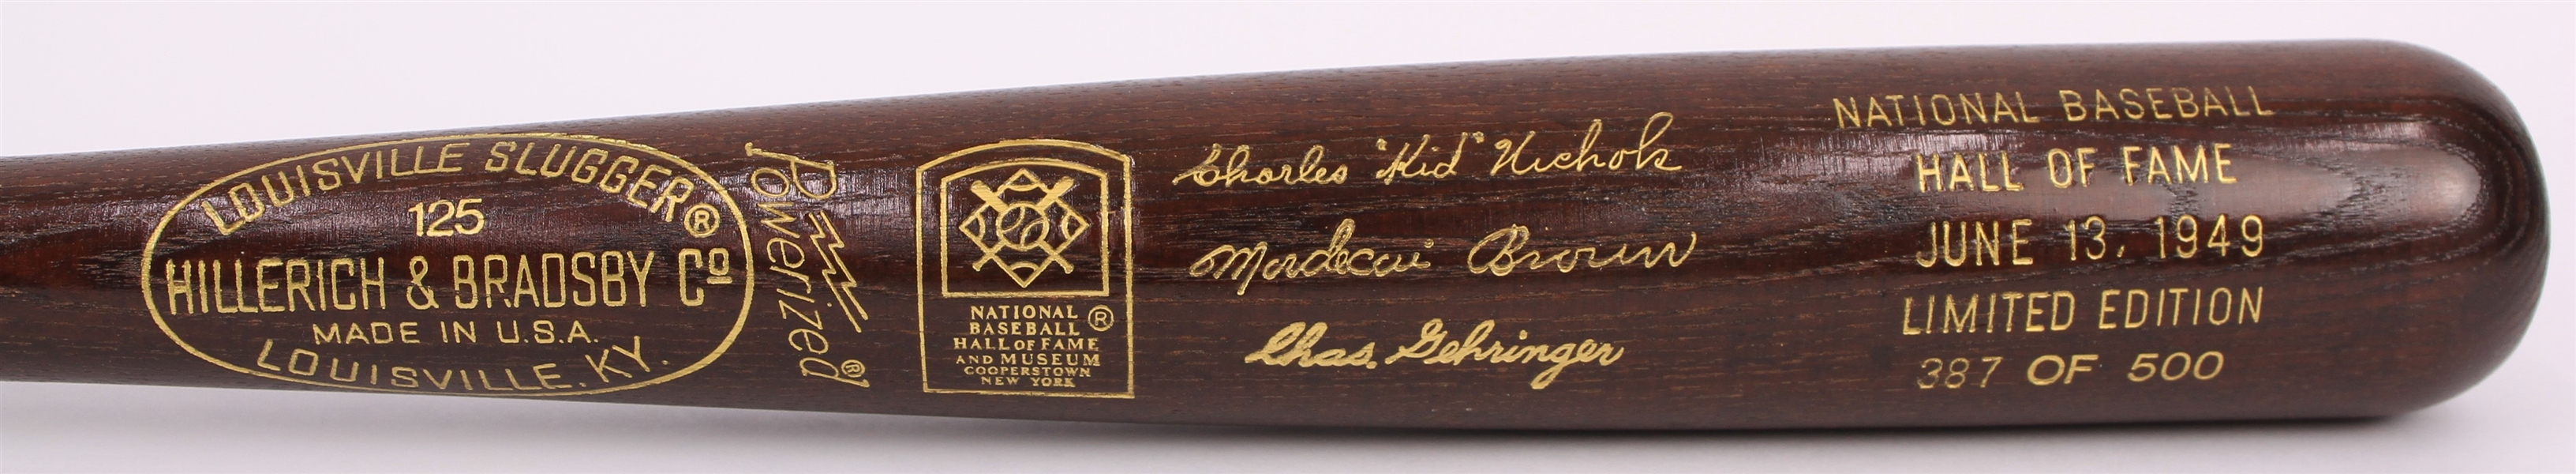 1949 MLB Hall of Fame Induction Class H&B Louisville Slugger Commemorative Bat 387/500